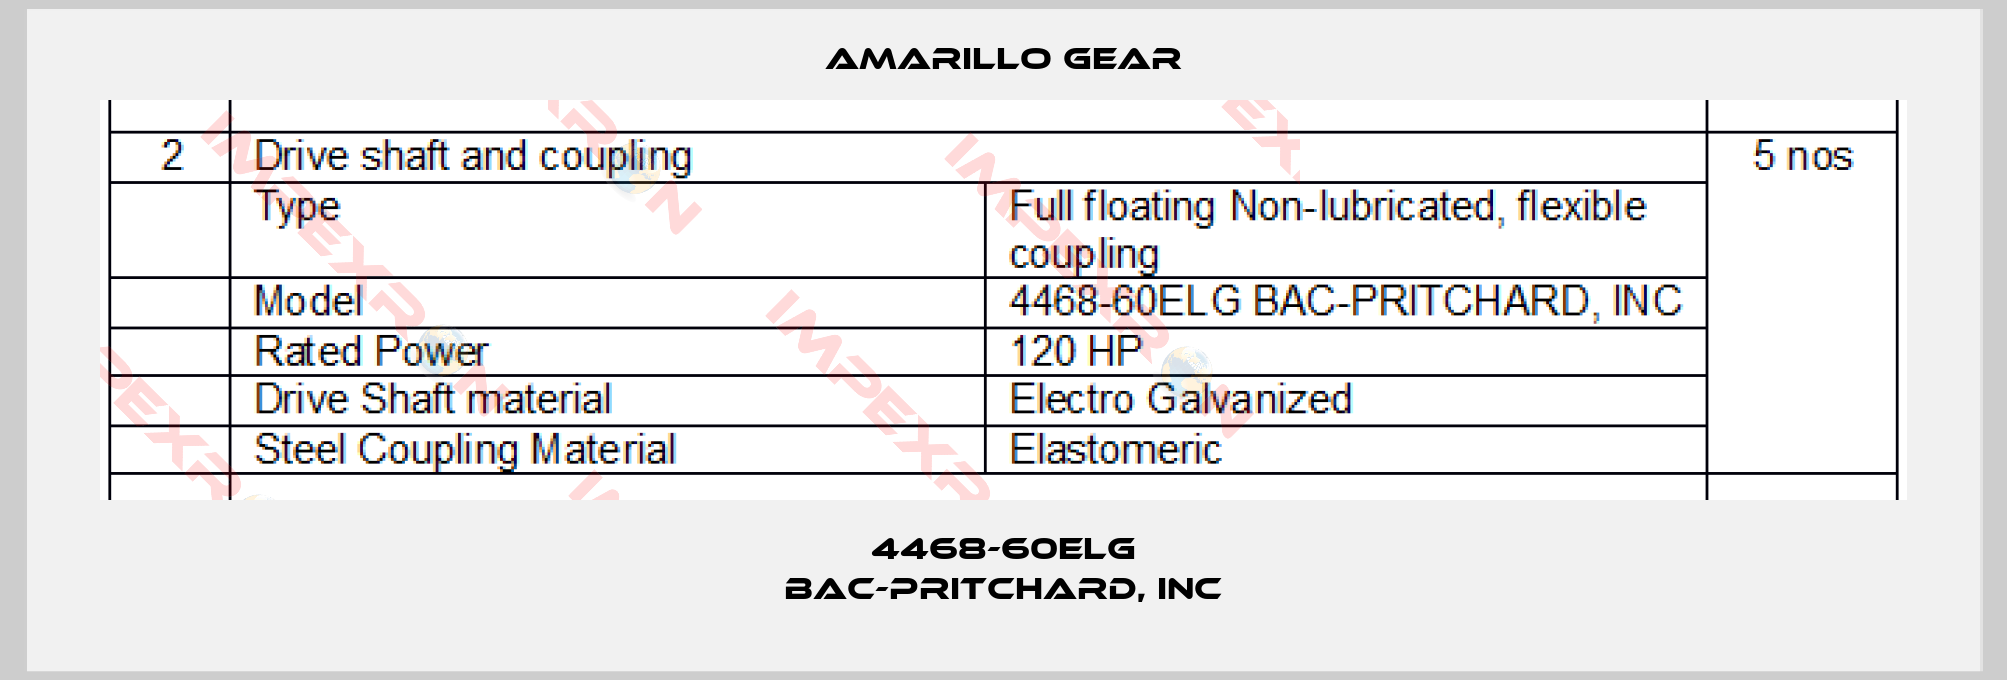 Amarillo Gear-4468-60ELG BAC-PRITCHARD, INC